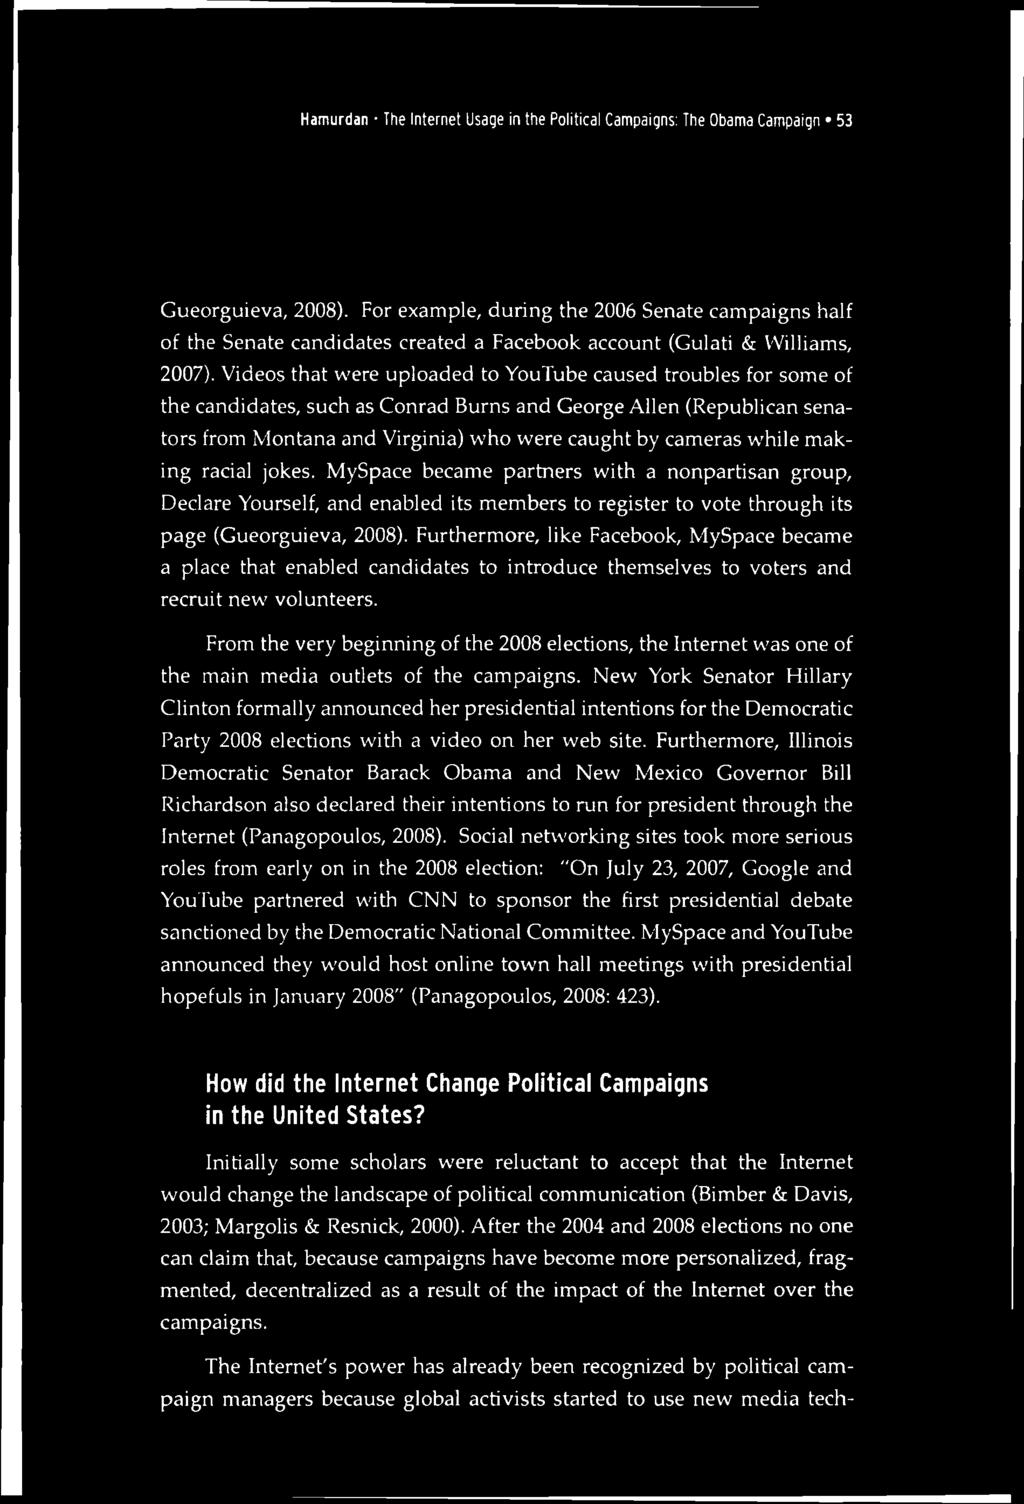 Hamurdan The Internet Usage in the Political Campaigns: The Obama Campaign 53 Gueorguieva, 2008).